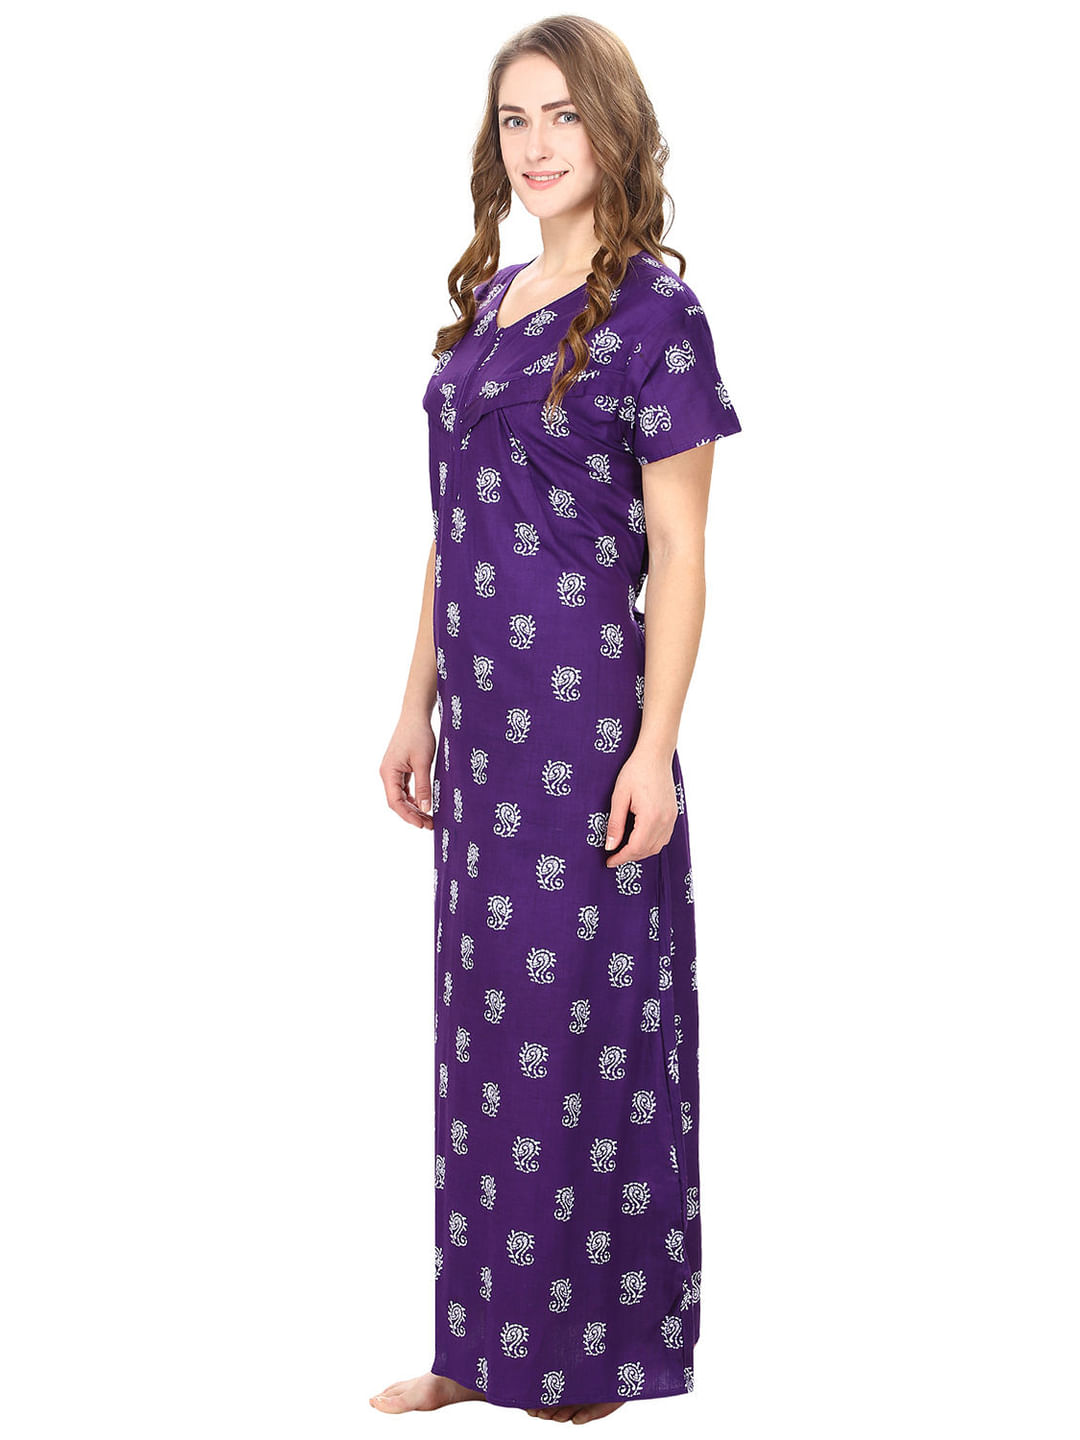 Cotton Purple Printed Maternity Nighty (Free Size)